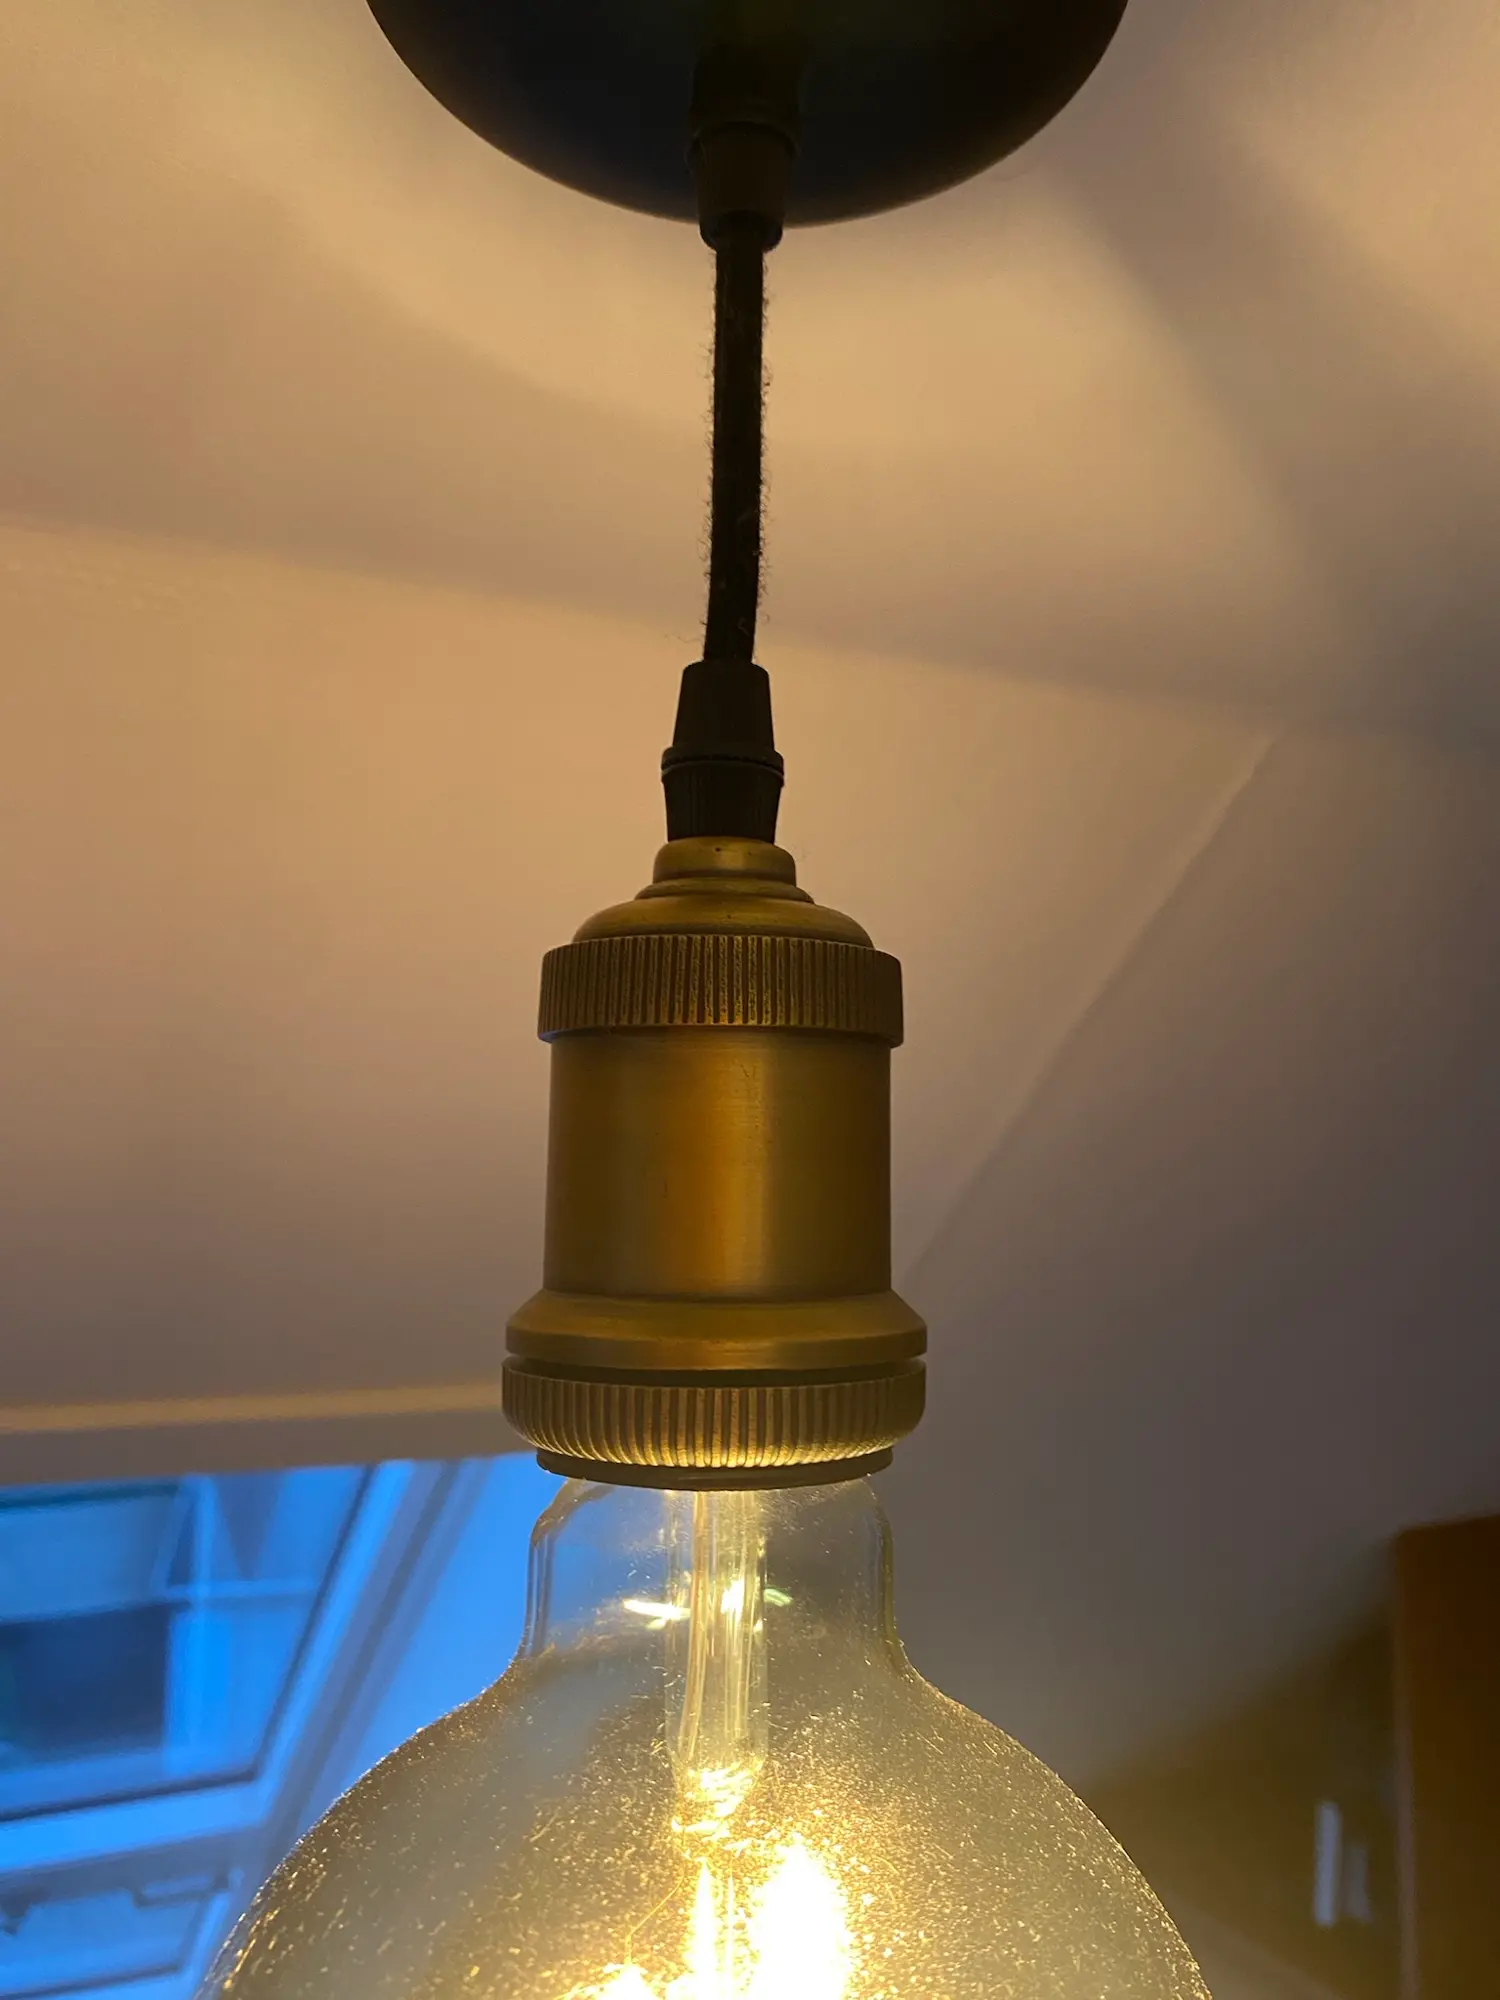 House Doctor loftslampe